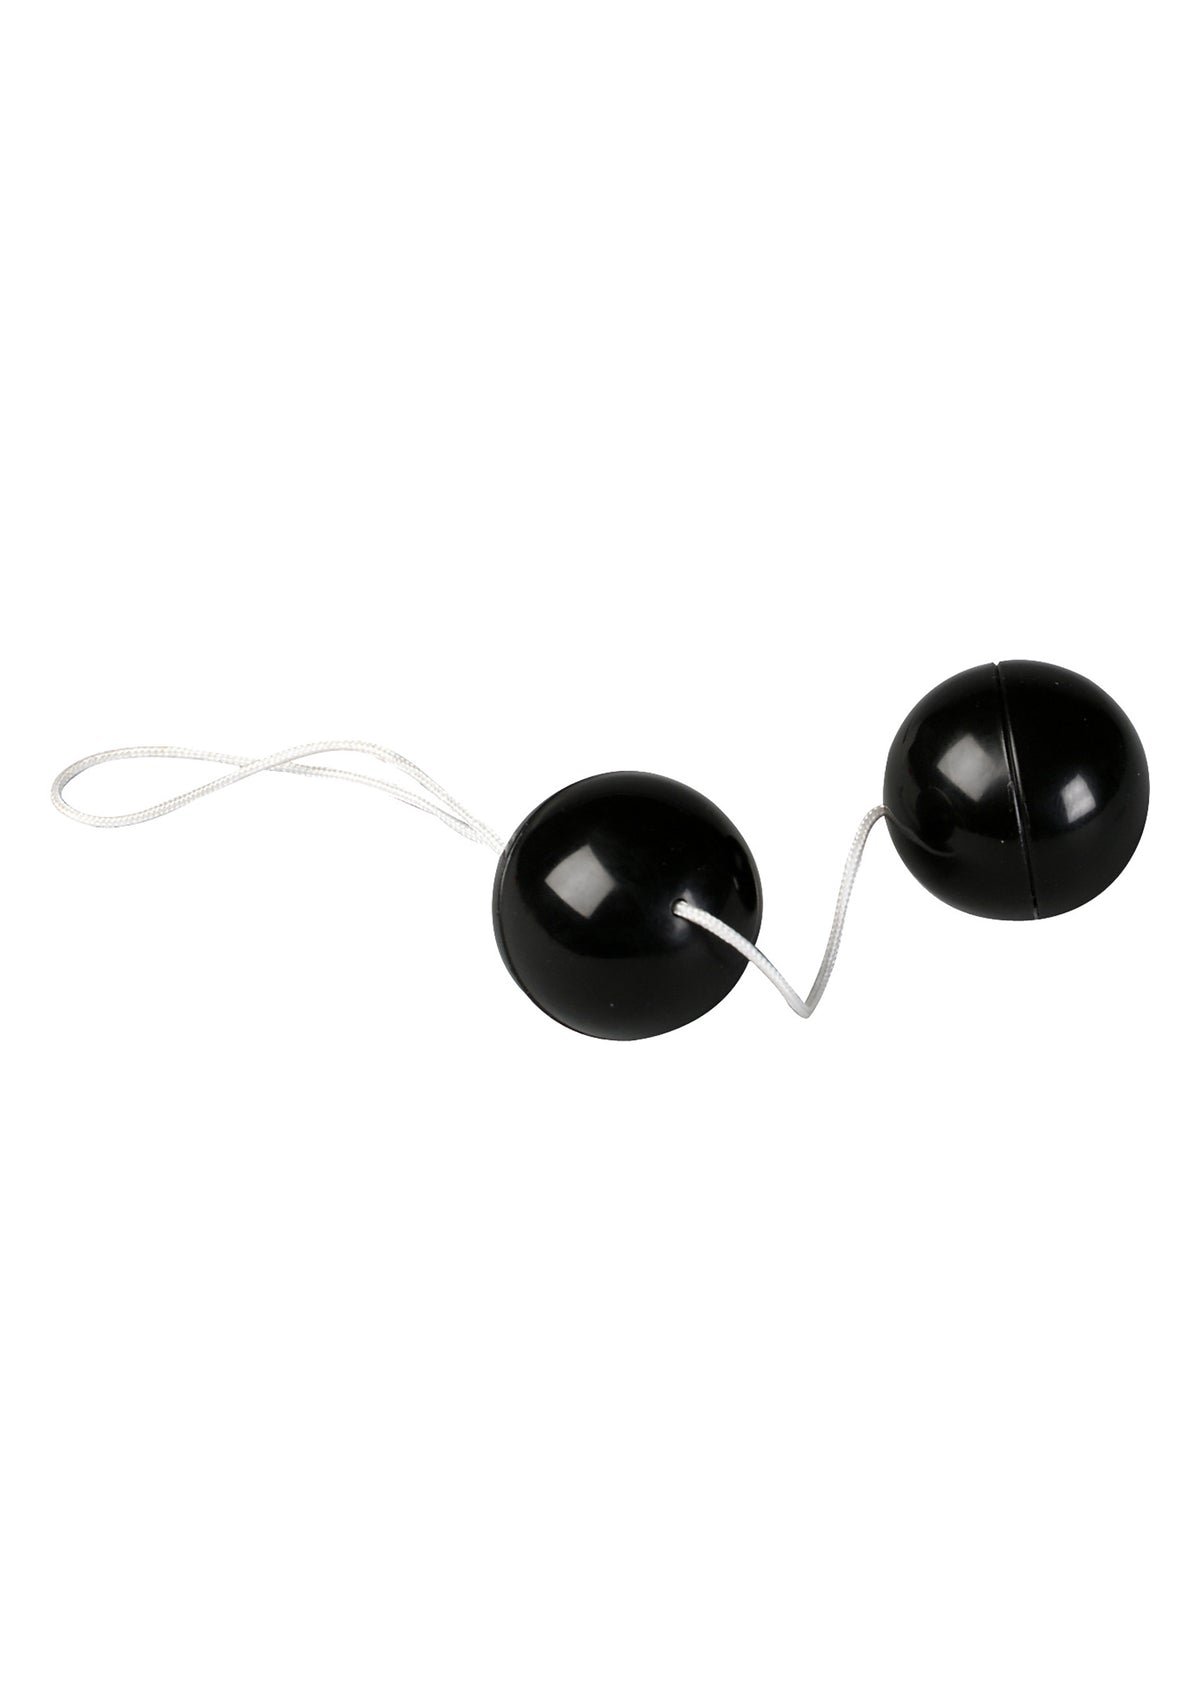 Pvc Duotone Balls-erotic-world-munchen.myshopify.com